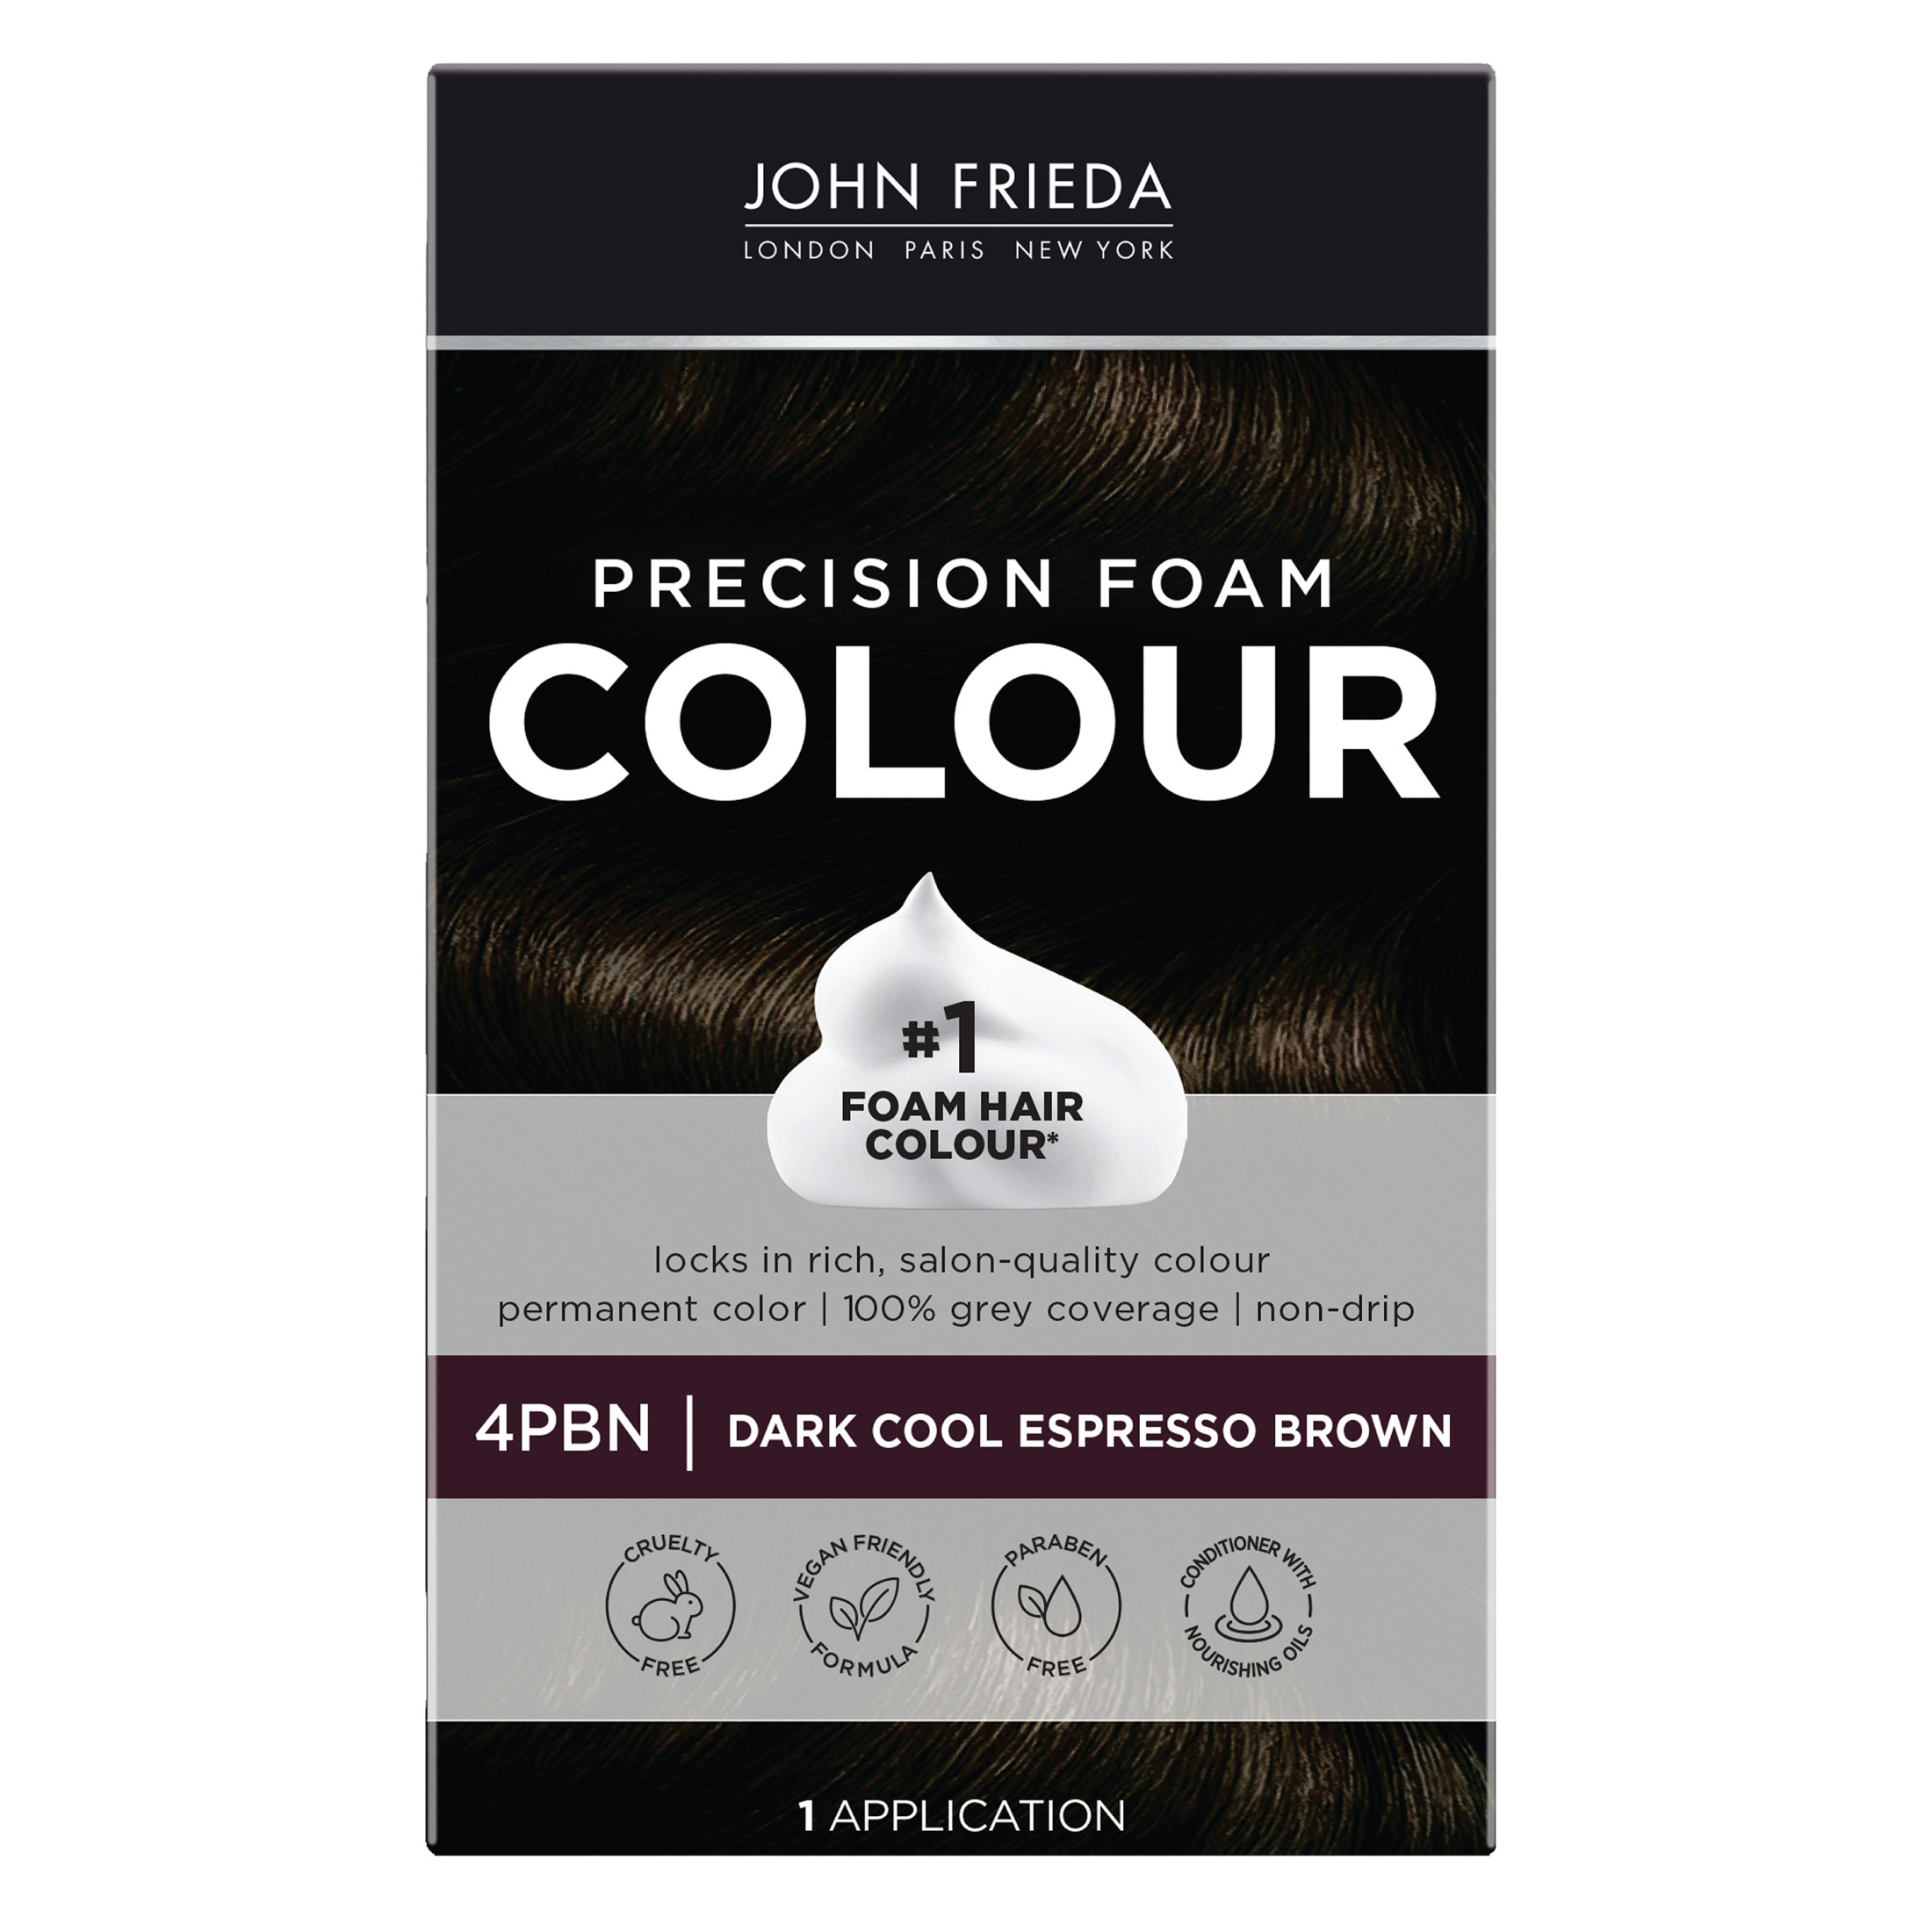 John Frieda Precision Foam Hair Color Kit, Brown Hair Dye, 5NBG Medium Chestnut Brown Hair Color, 1 Application - image 1 of 10